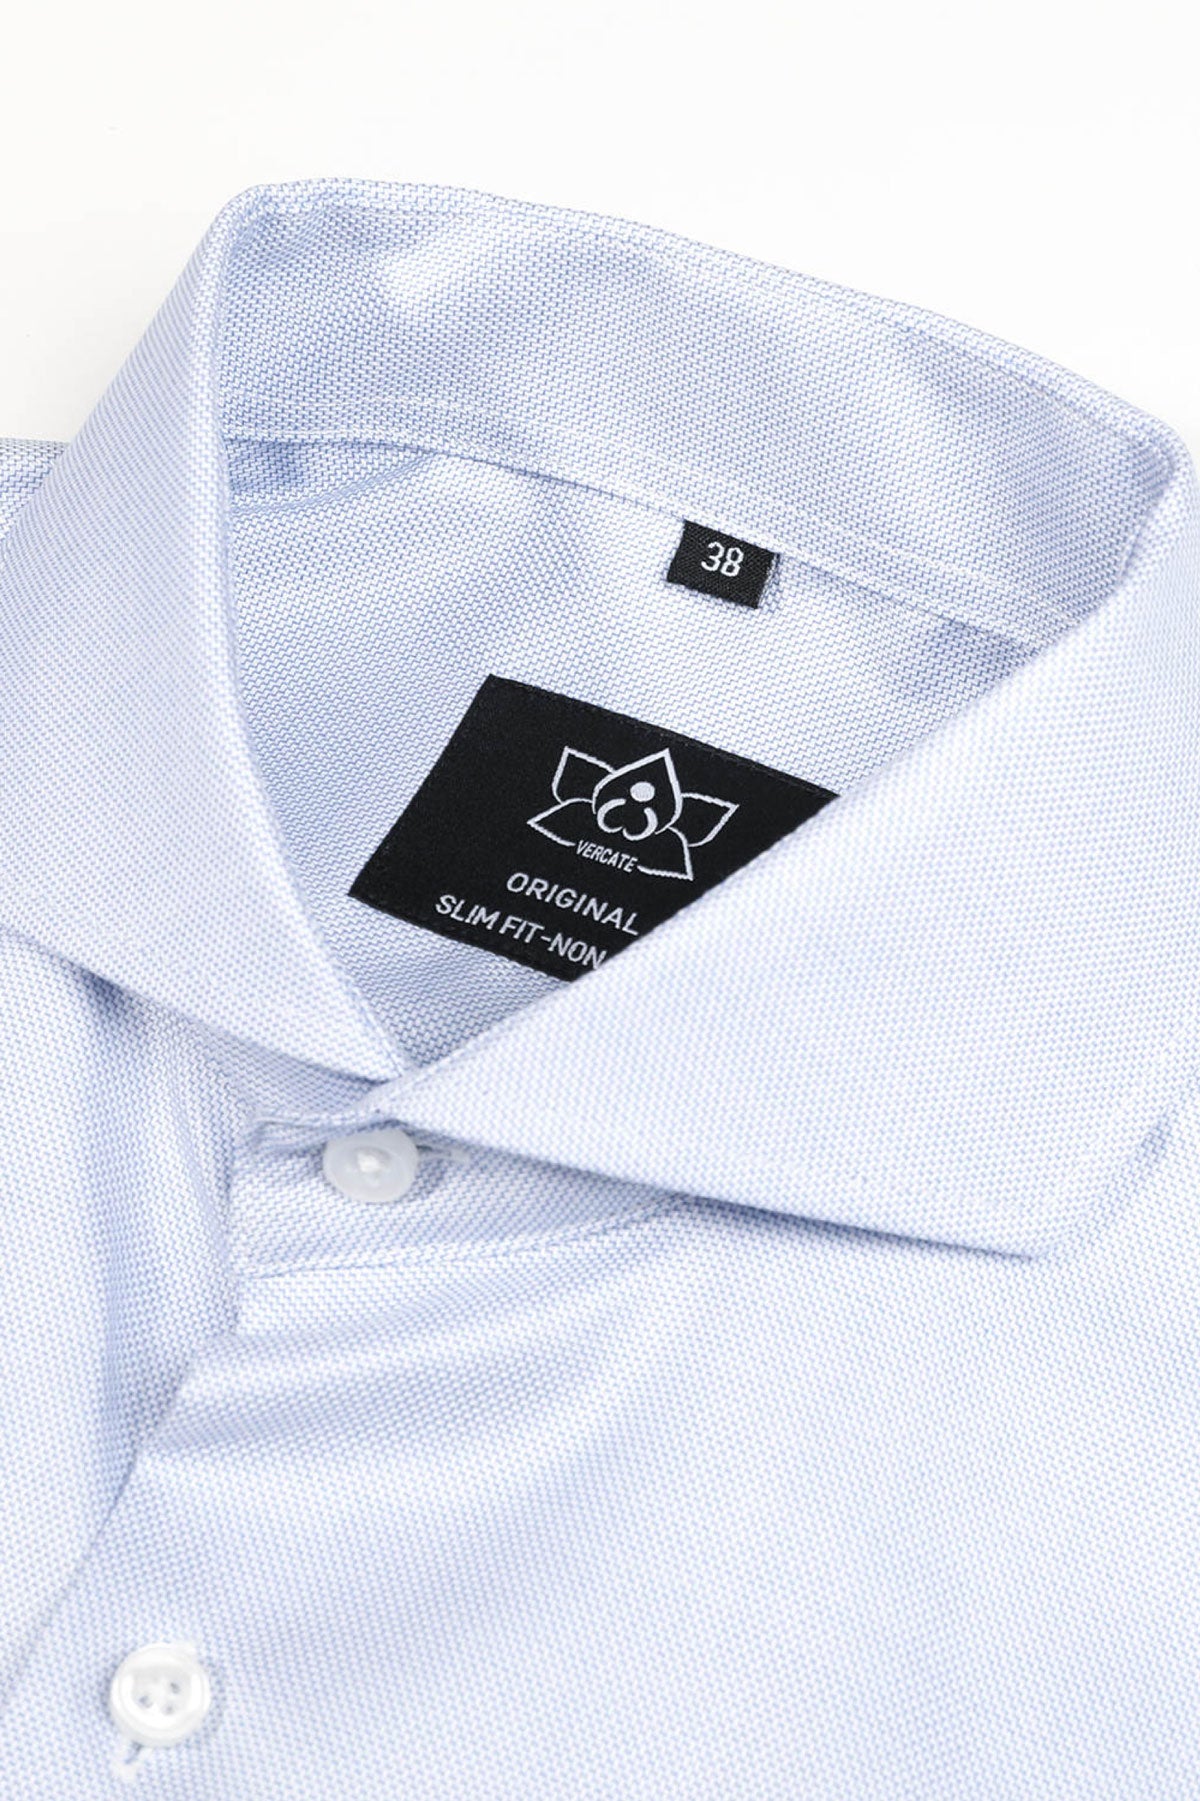 Strijkvrij Overhemd - Platinum Blauw Jacquard - Overhemd - Vercate - Vercate - Overhemden - Strijkvrije overhemden - Heren